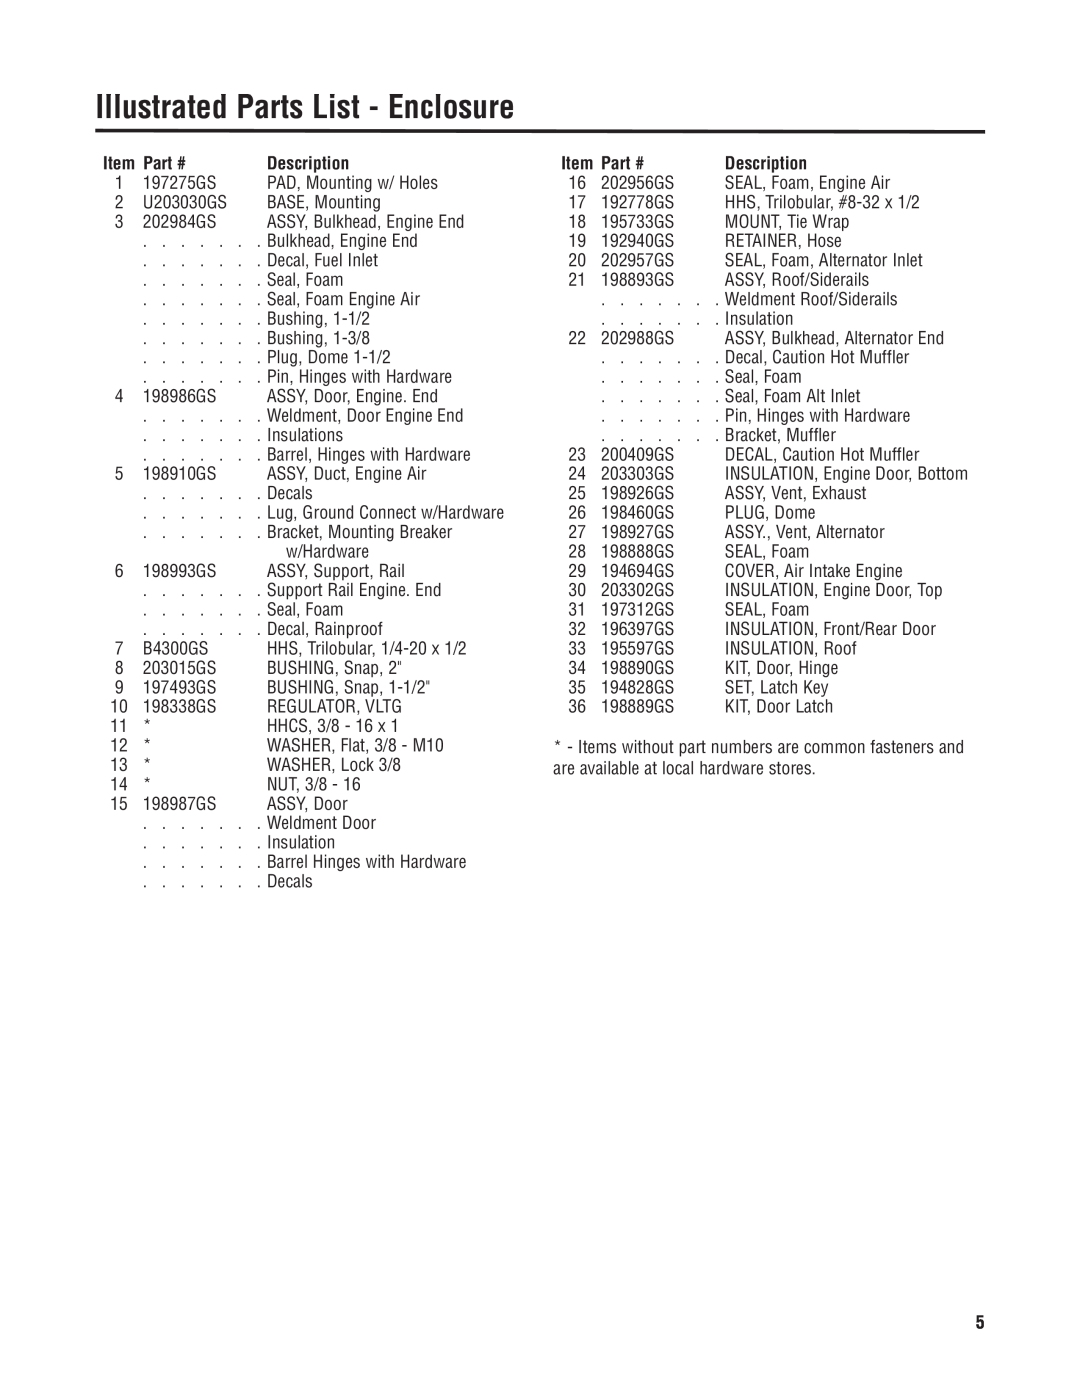 Briggs & Stratton 40226 manual Illustrated Parts List - Enclosure, Part #, Description 